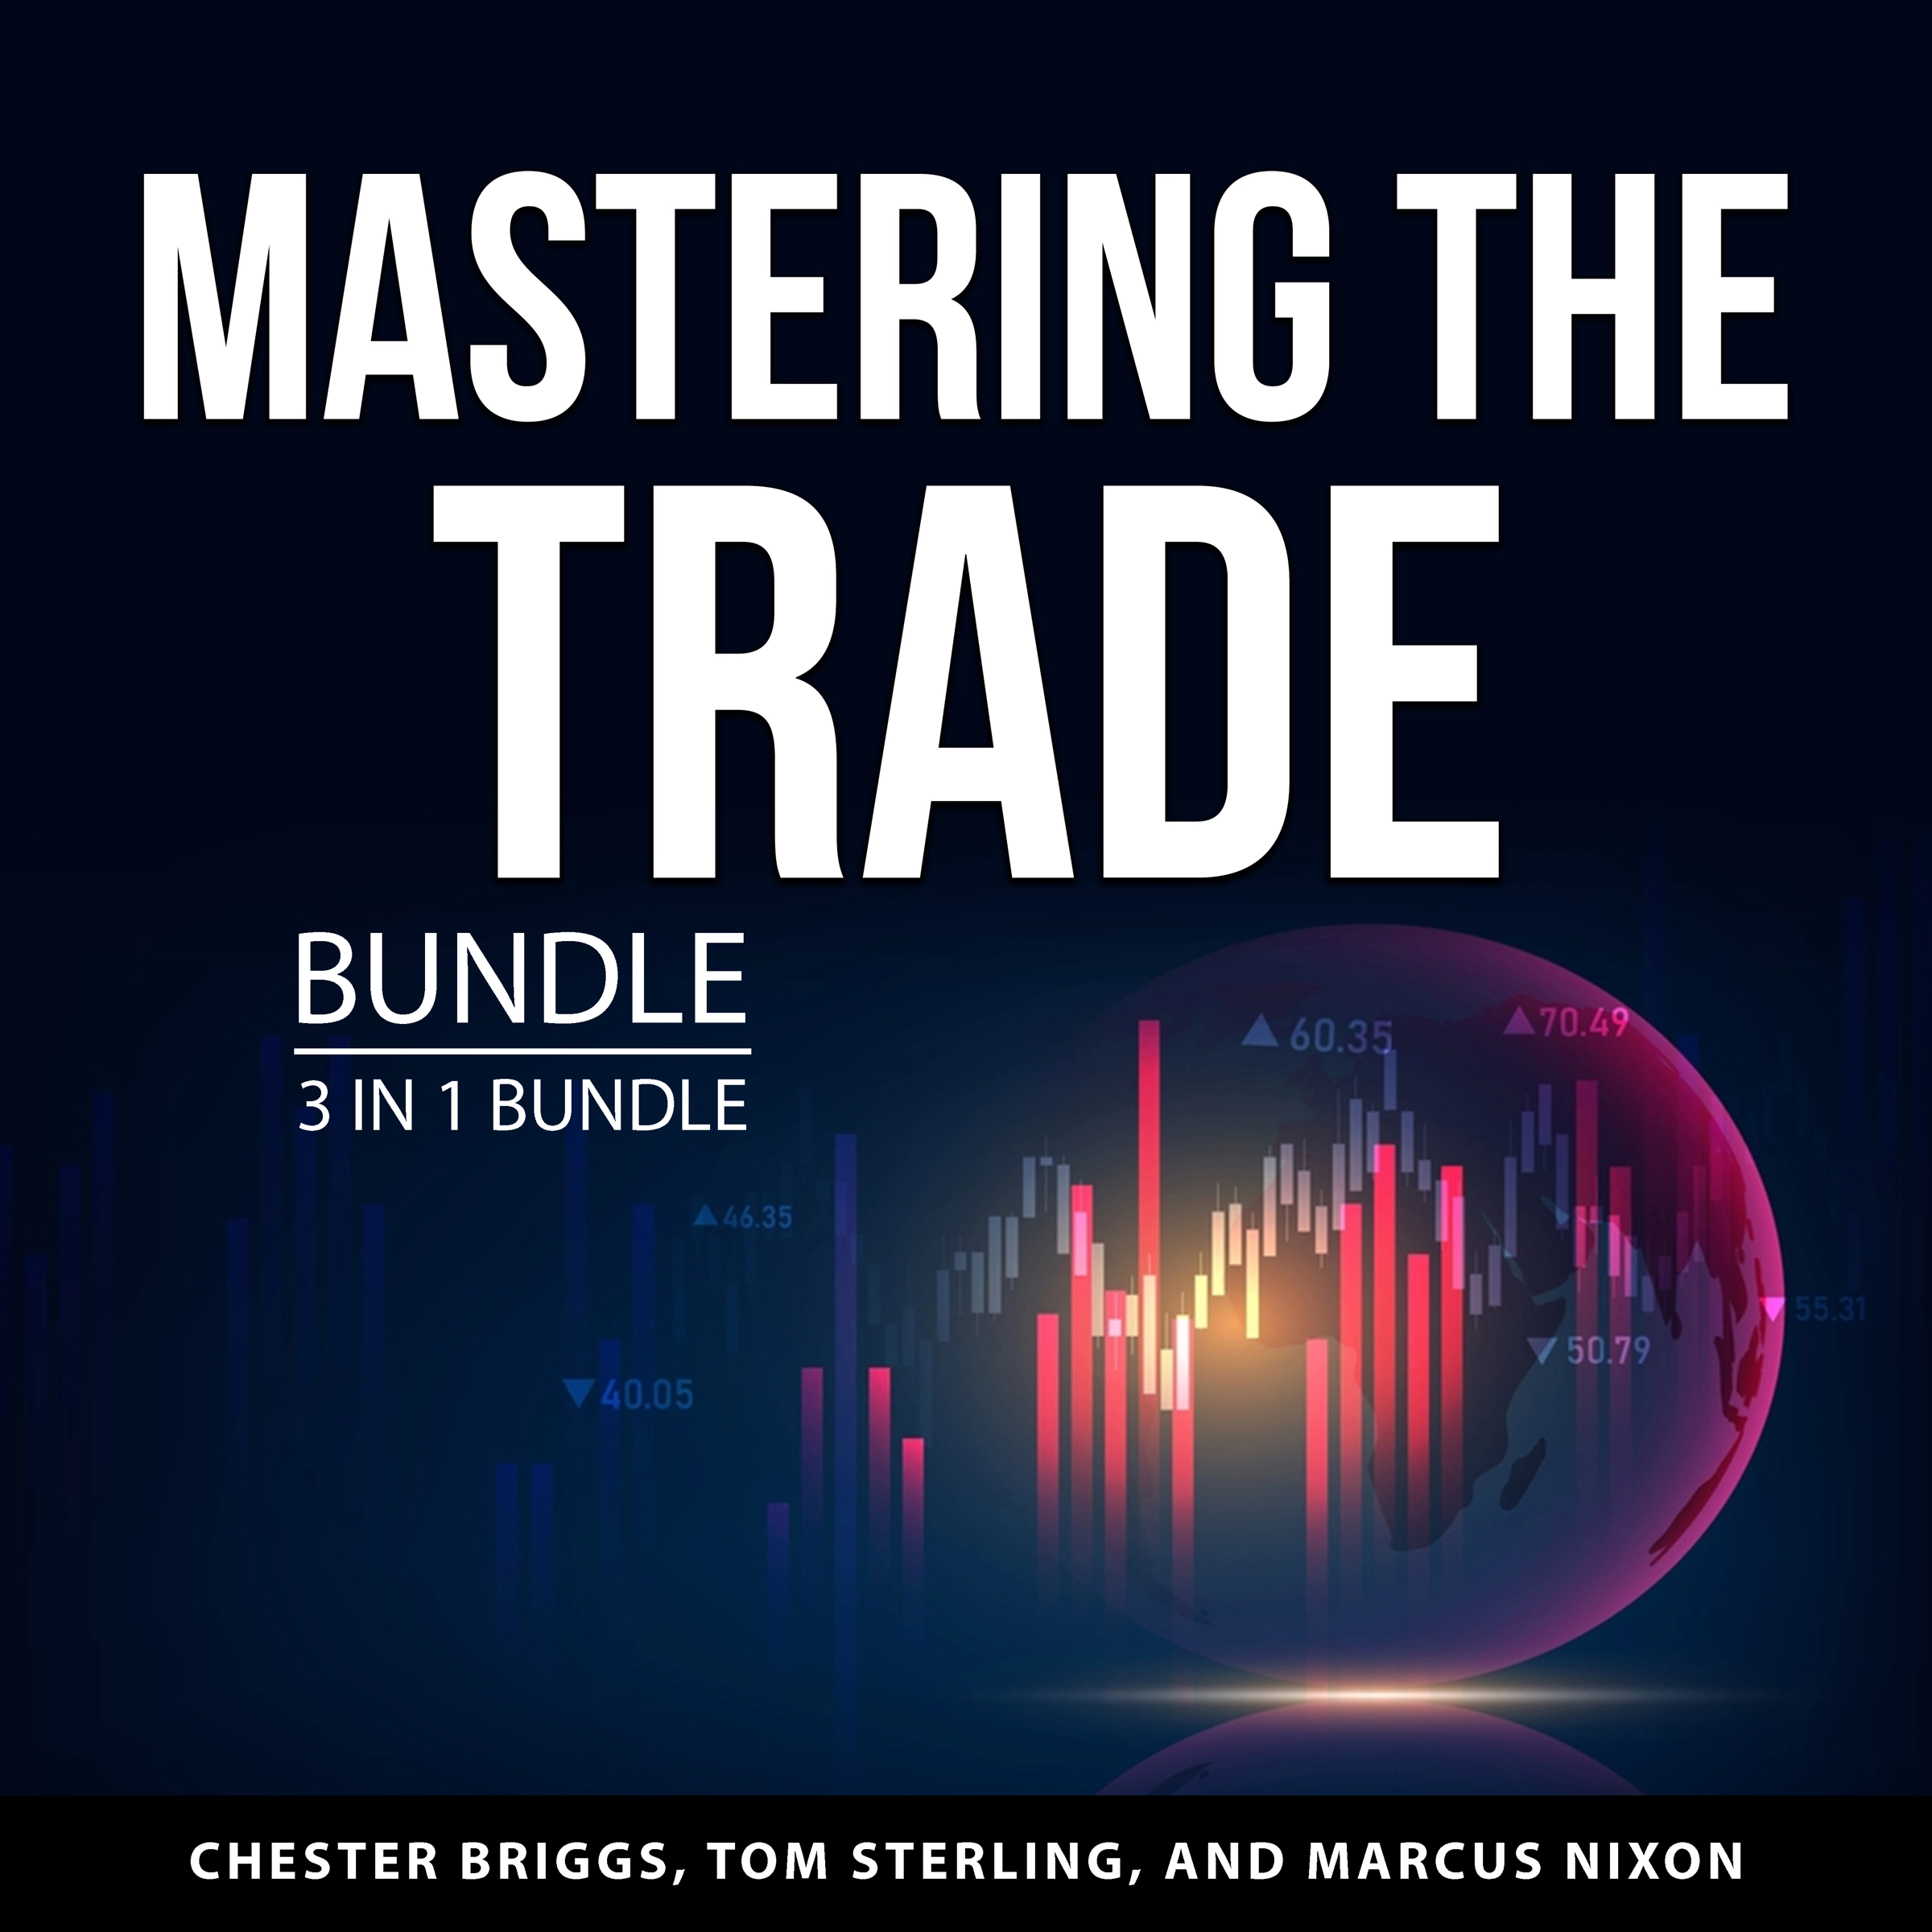 Mastering the Trade Bundle, 3 in 1 Bundle Audiobook by Marcus Nixon